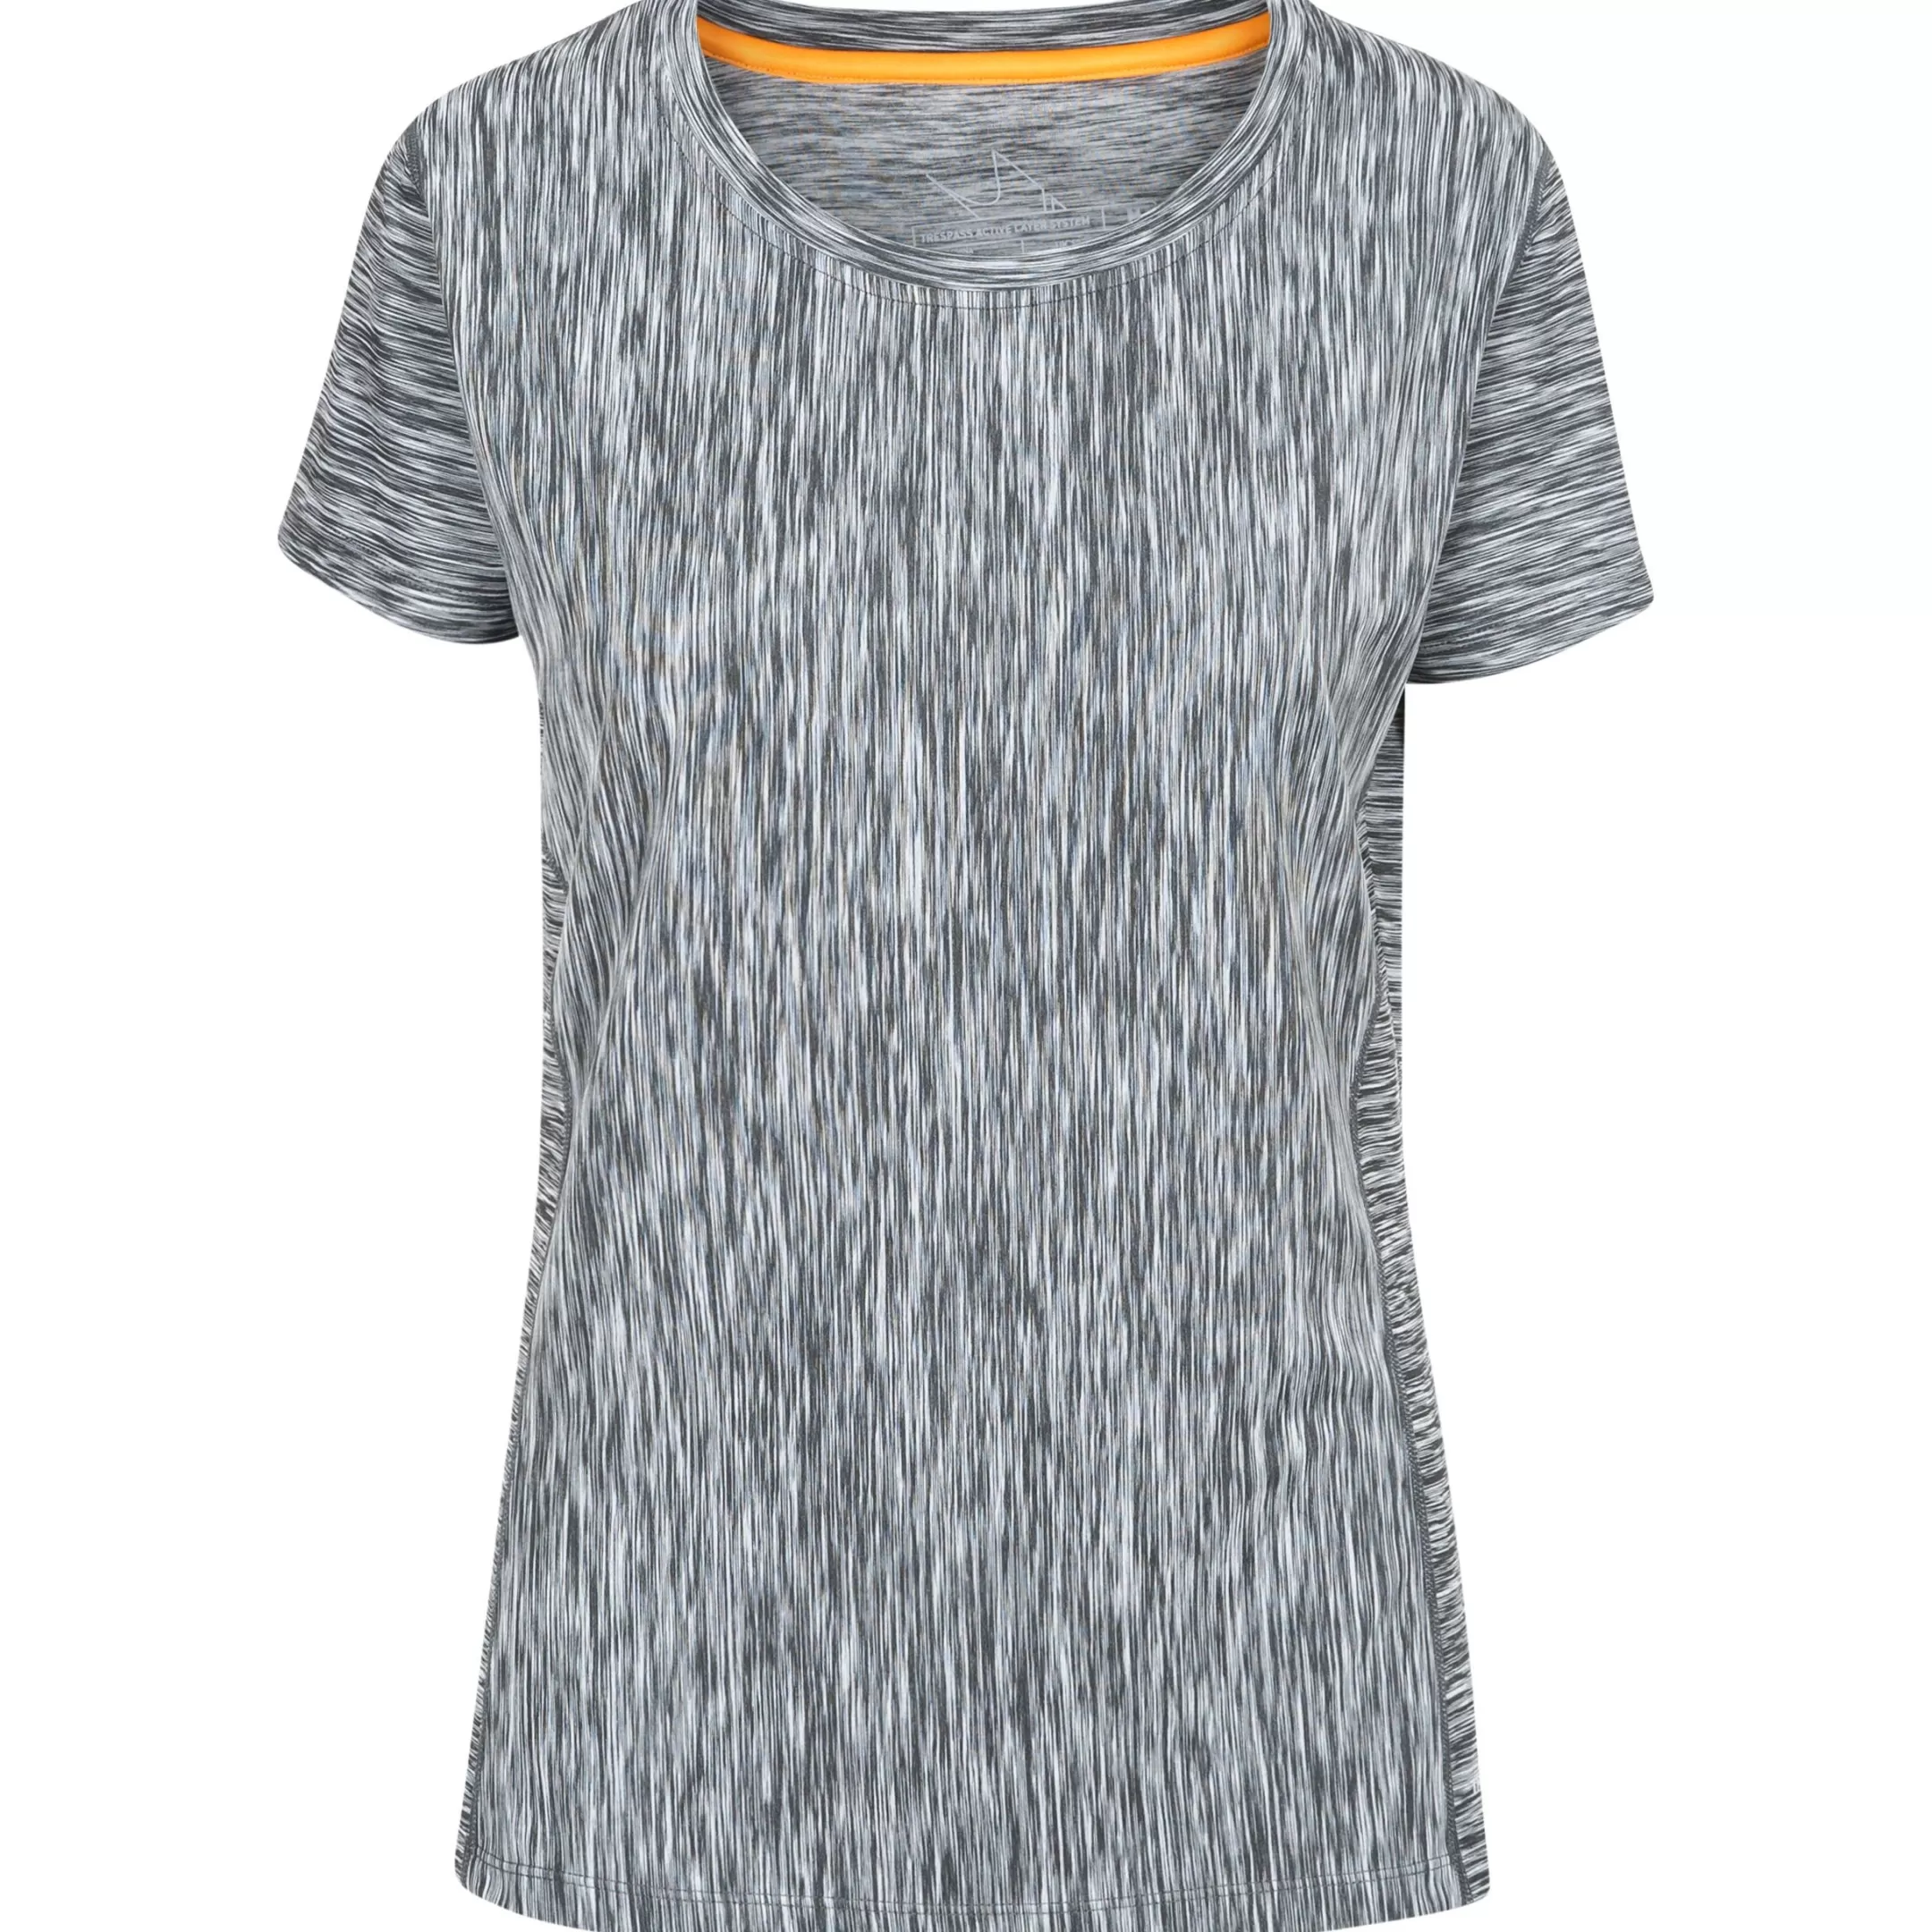 Daffney Women's Quick Dry Active T-Shirt | Trespass Flash Sale